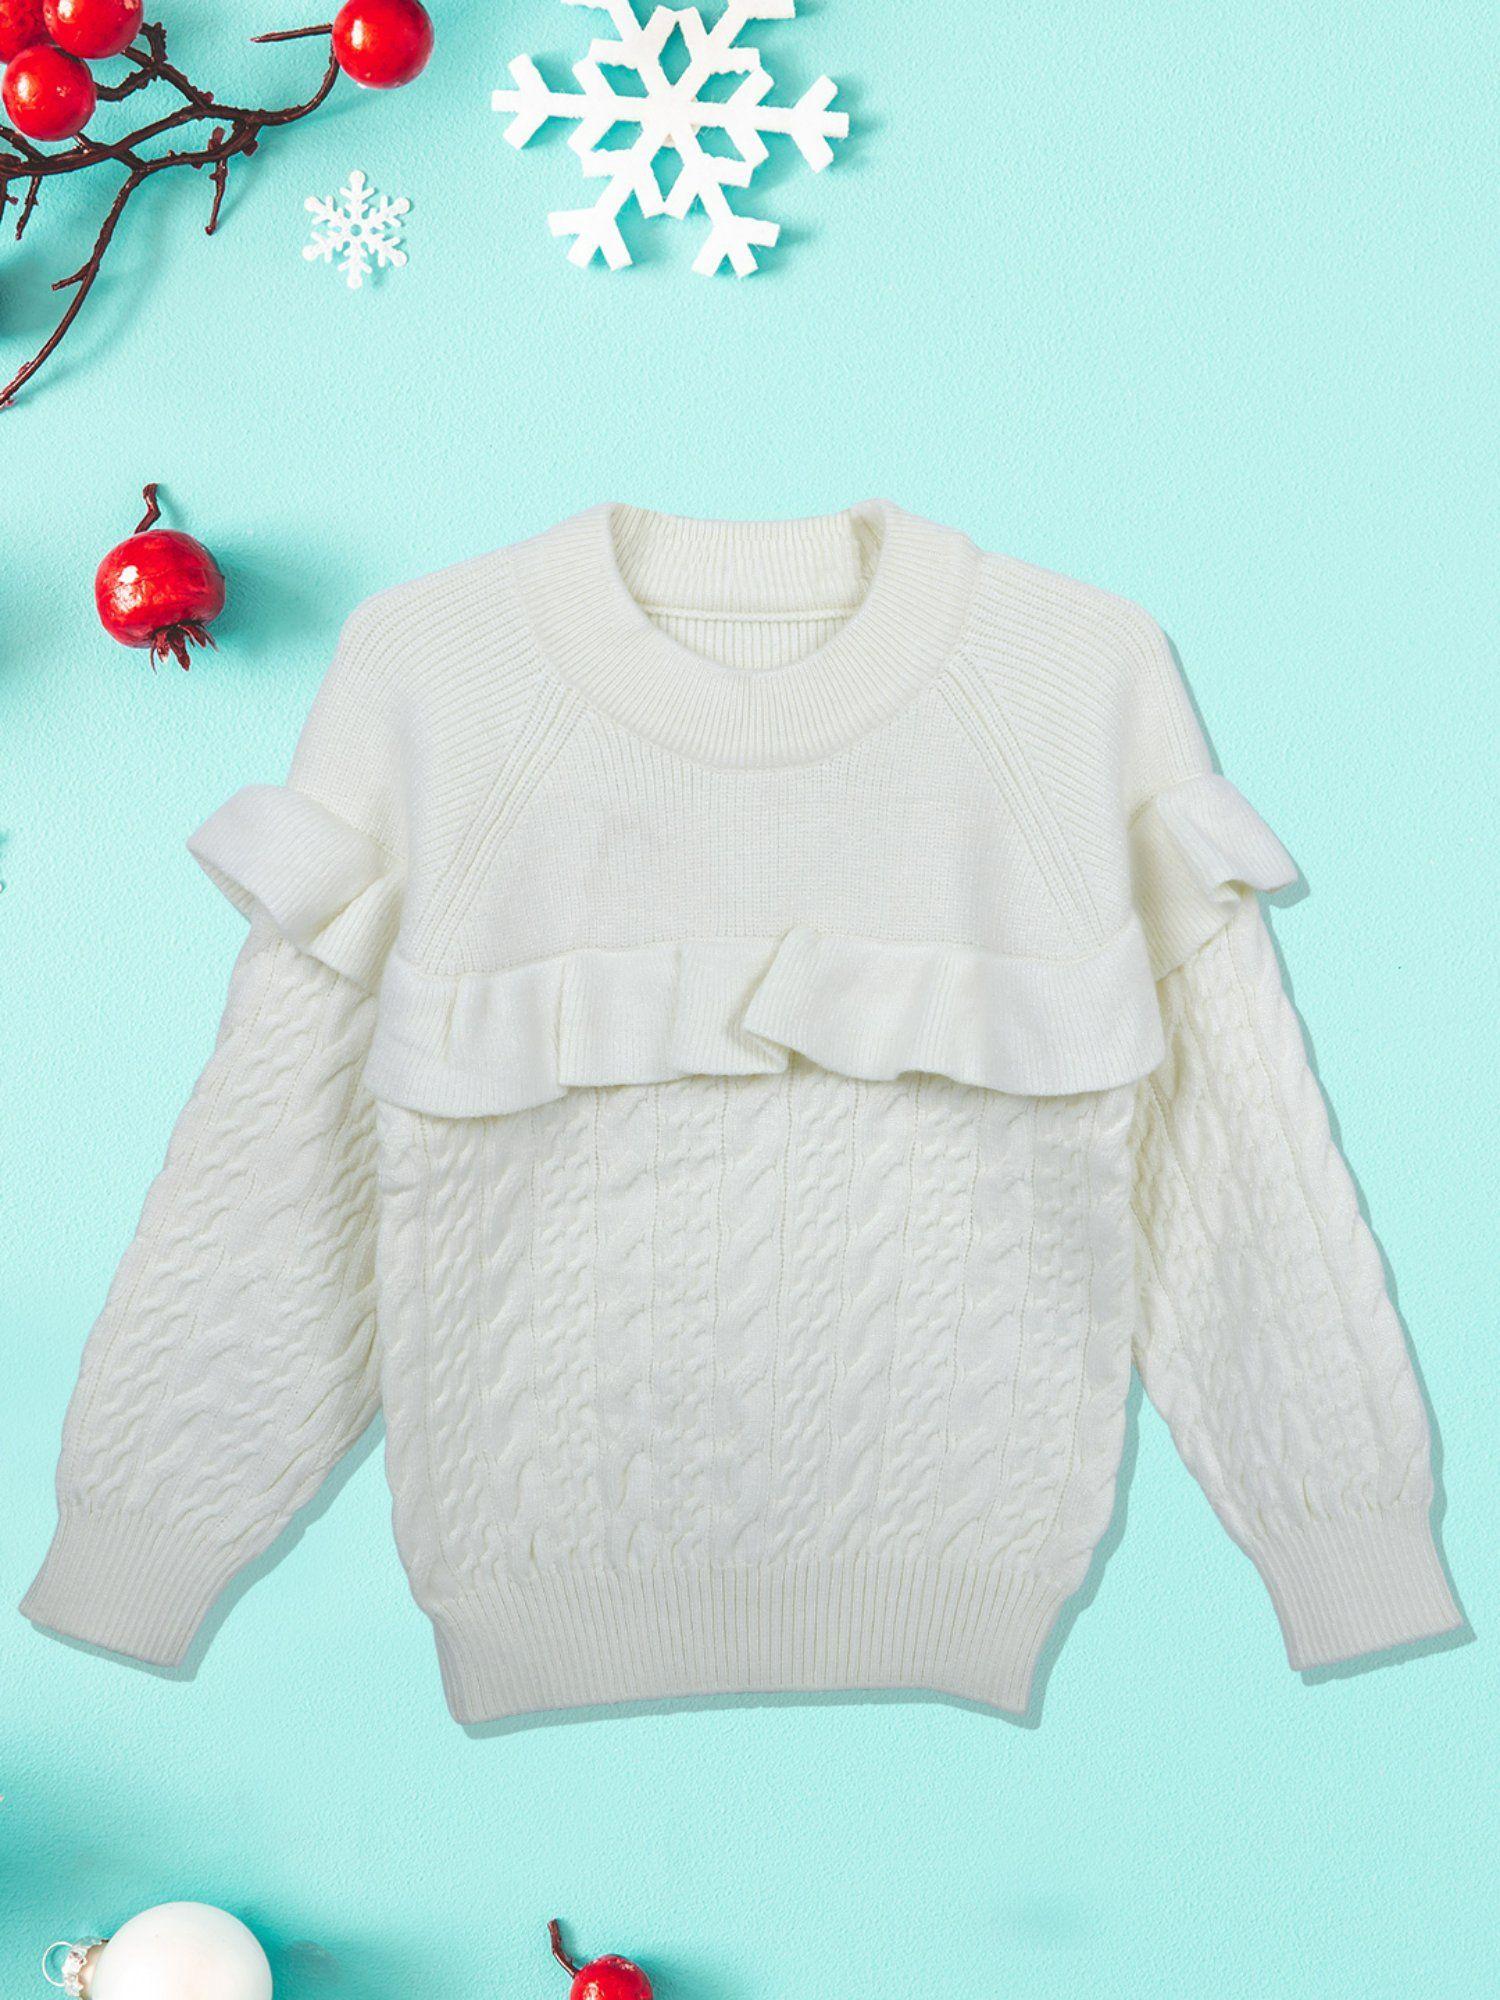 ruffled jumper premium full sleeves braided knit sweater white